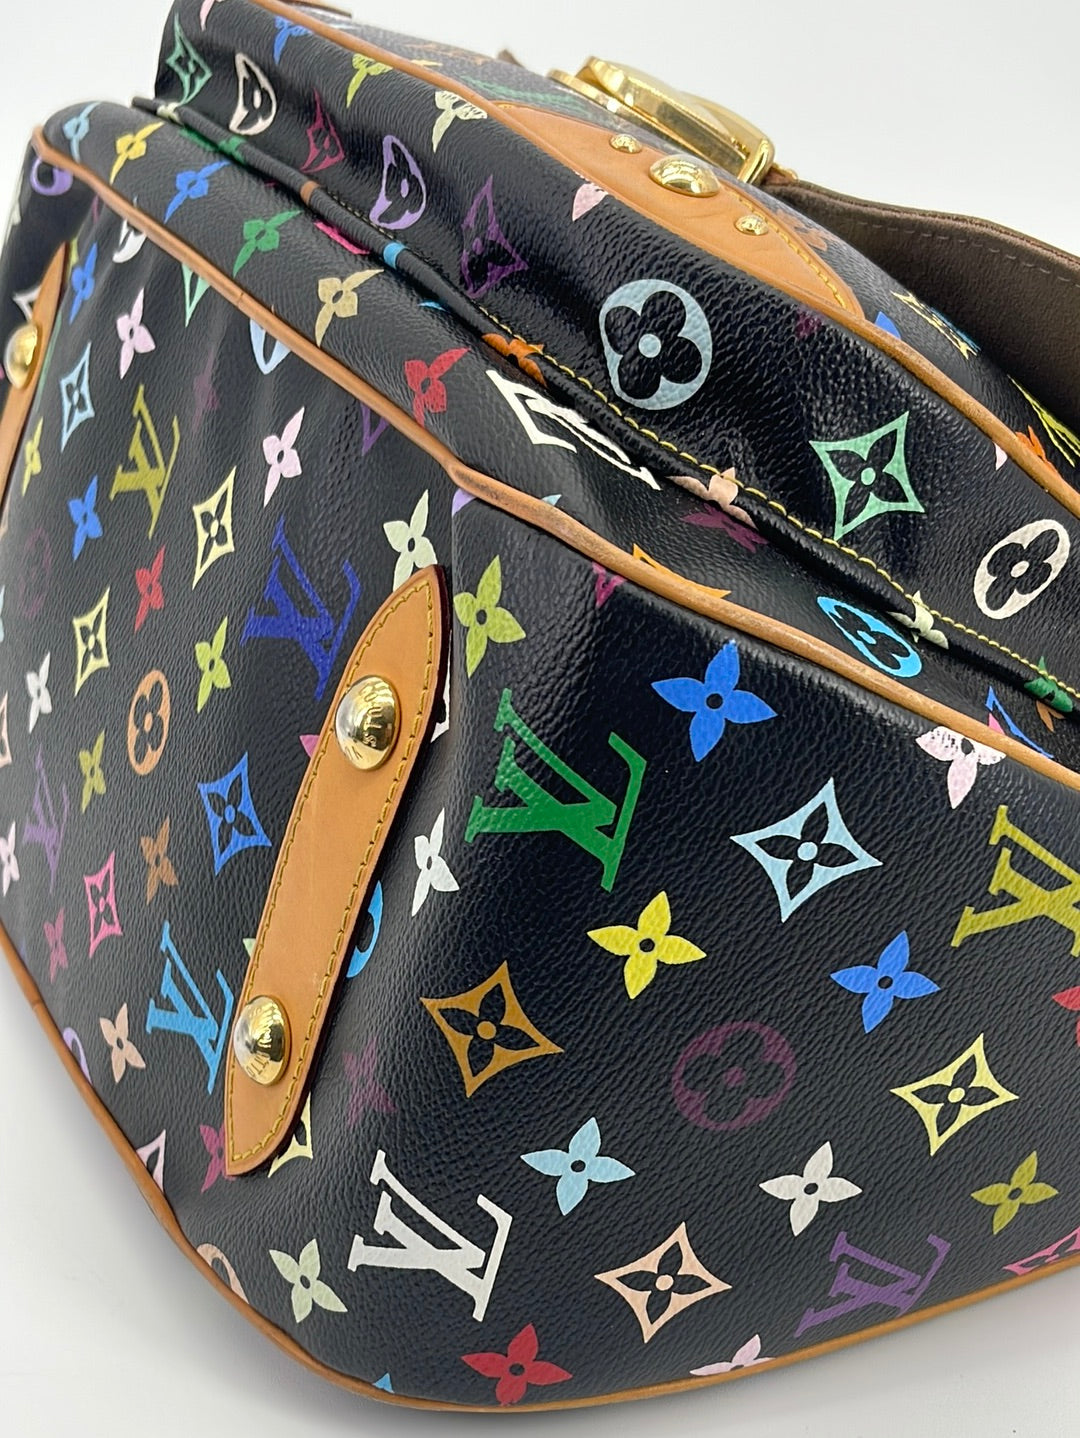 $3000 Louis Vuitton Monogram Multicolor Black Rita Gold Chain Bag